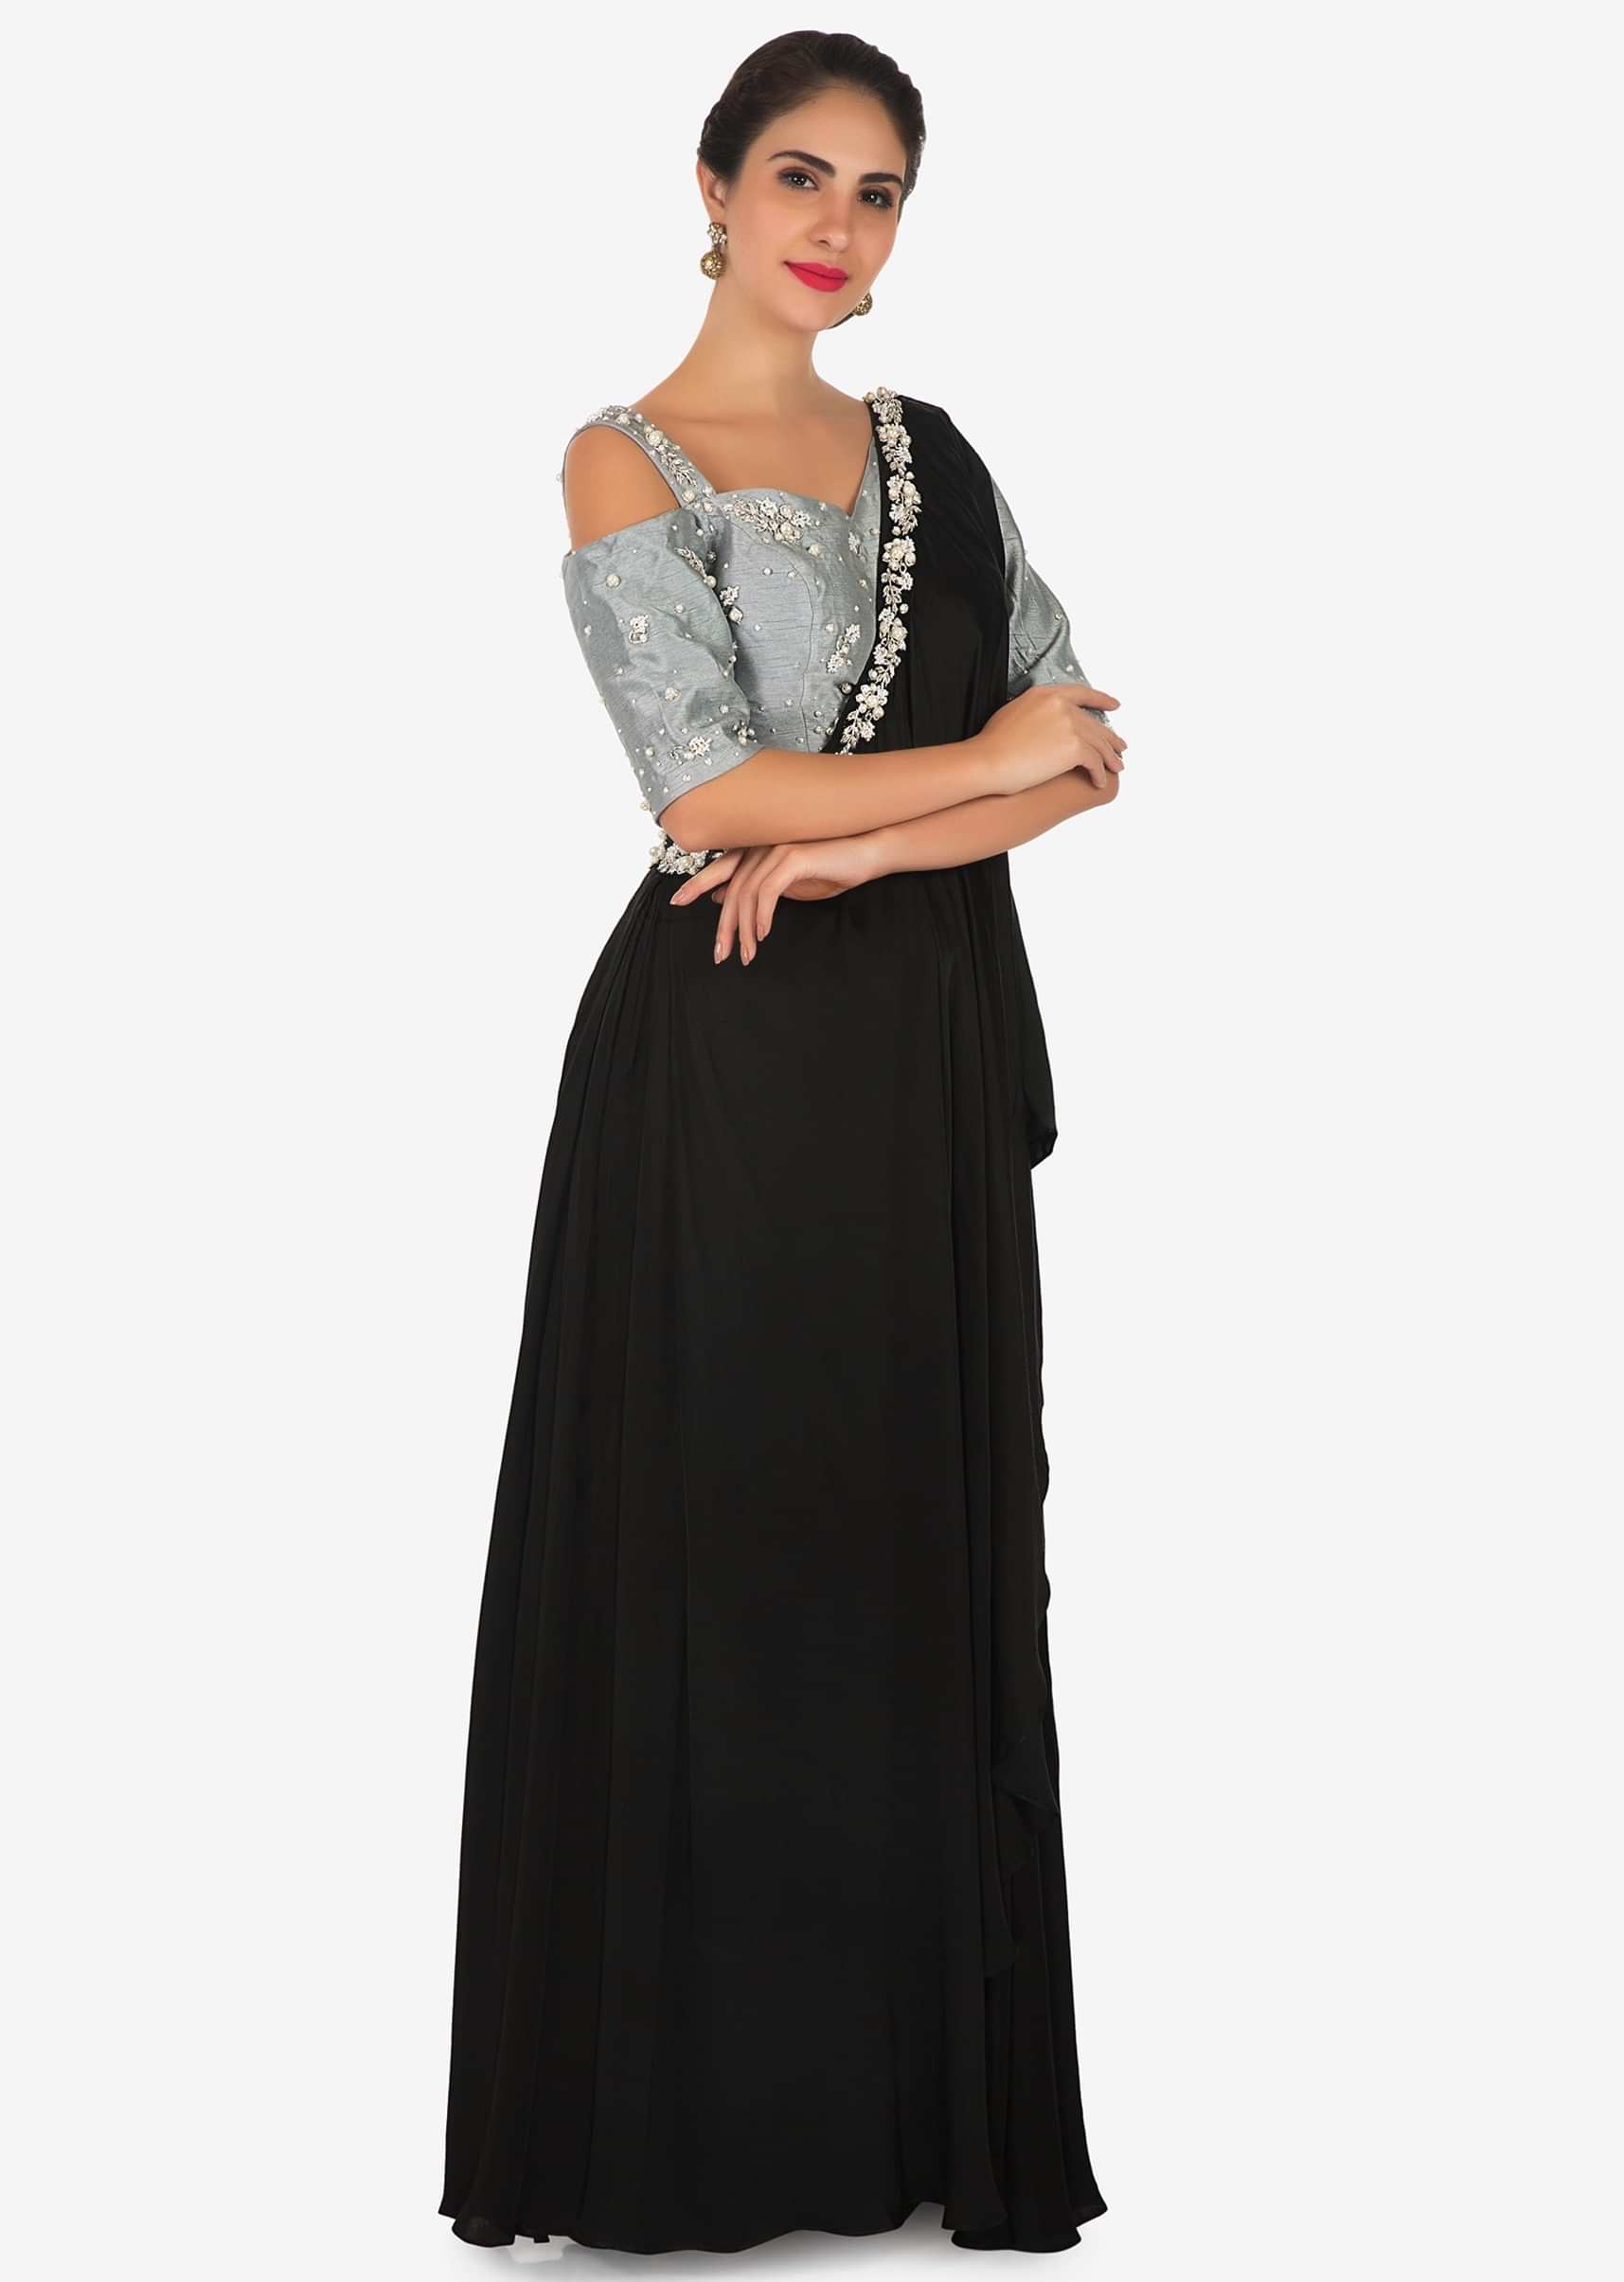 Debina Bonnerjee in Kalki black skirt with grey blouse matched with fancy dupatta only on Kalki